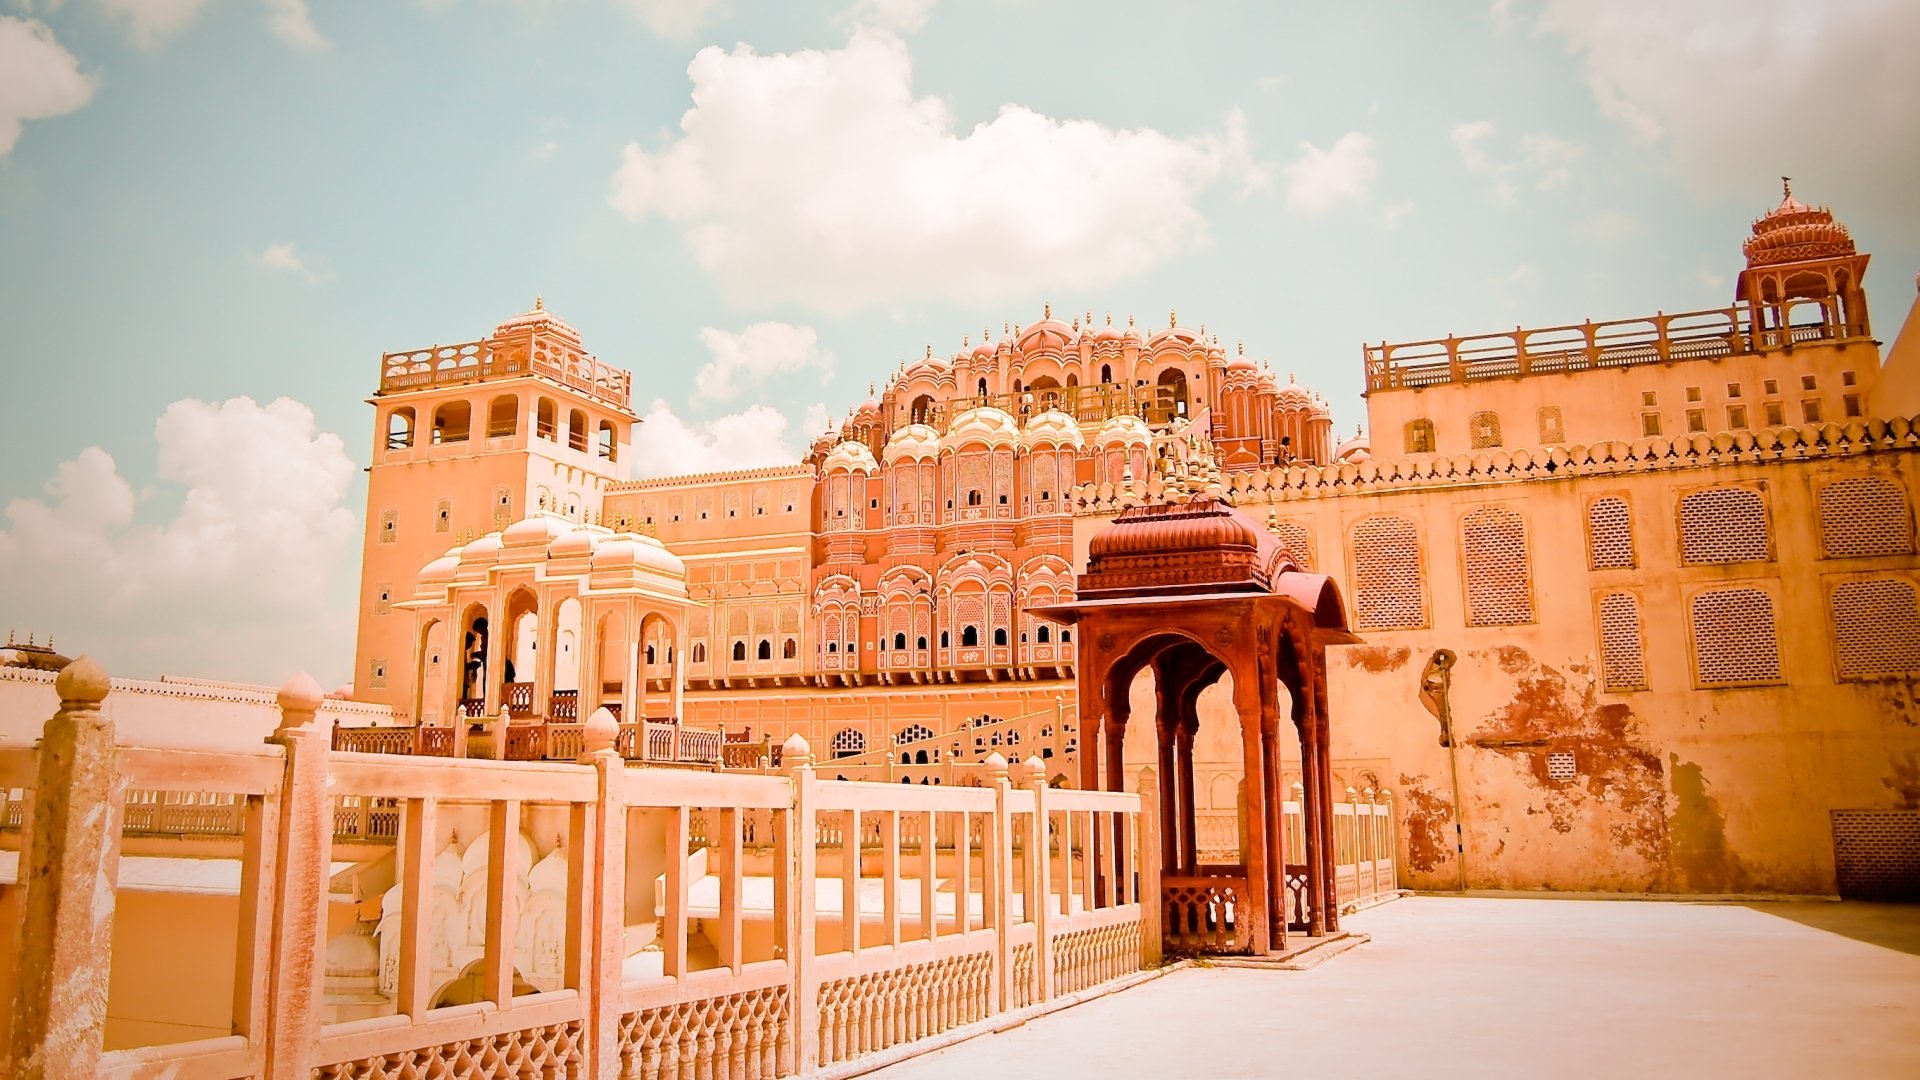 1,918 Taj Mahal Wallpaper Images, Stock Photos & Vectors | Shutterstock